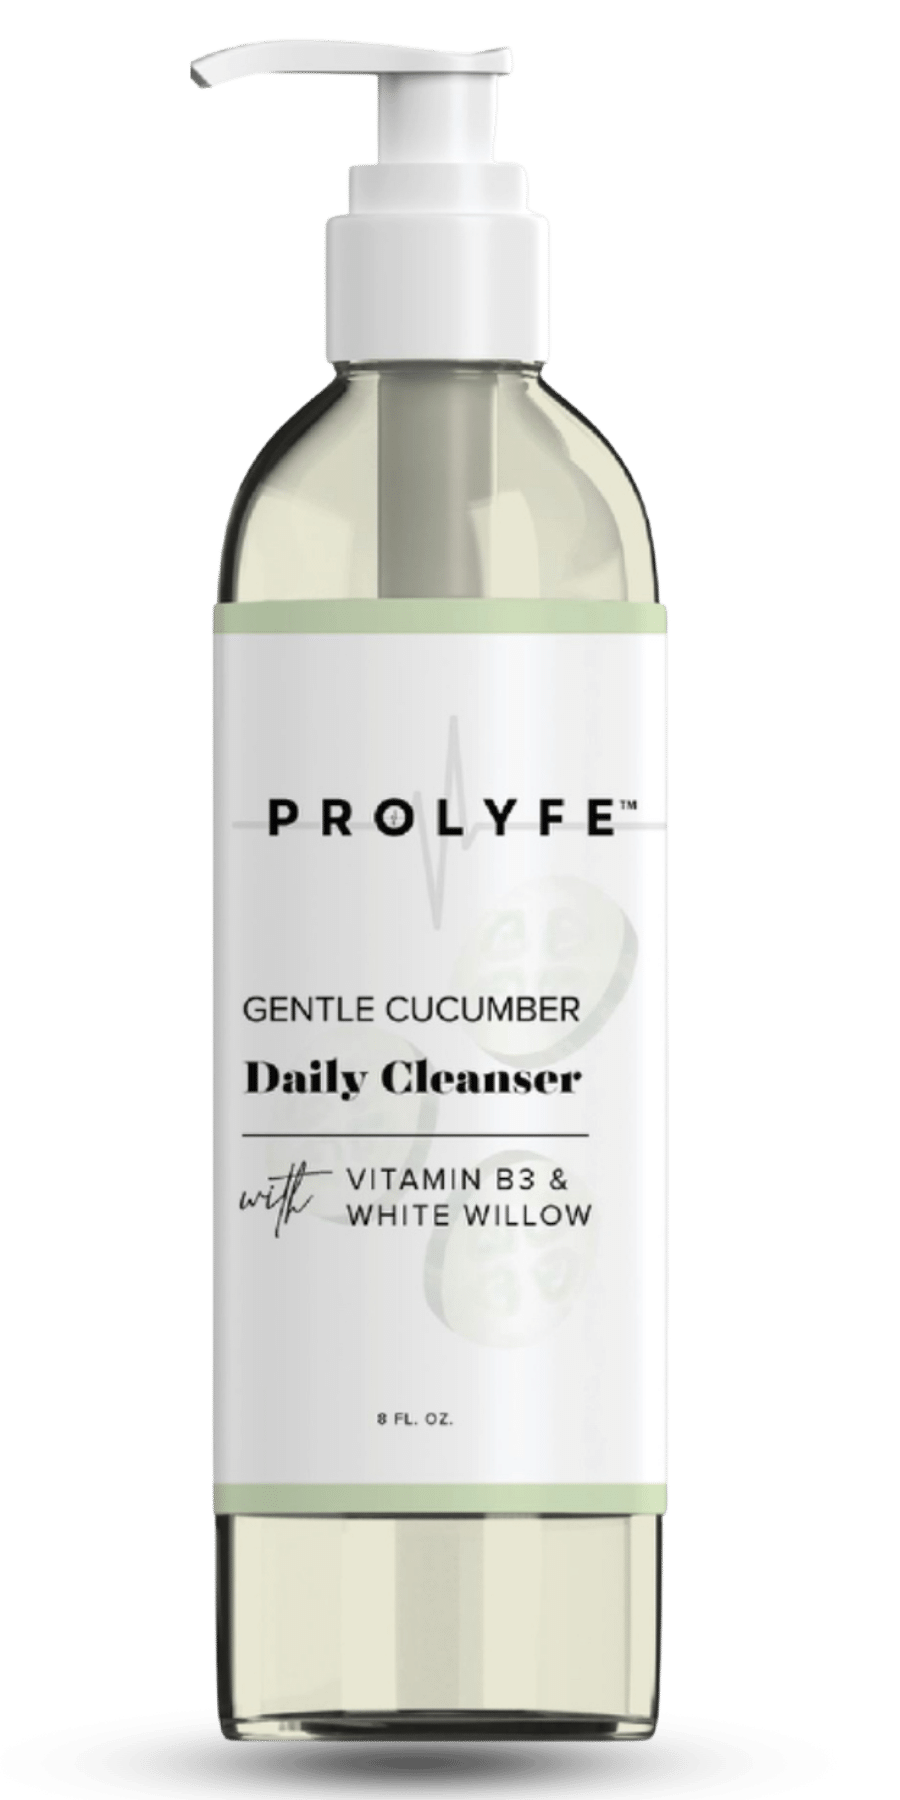 Prolyfe skincare cleanser